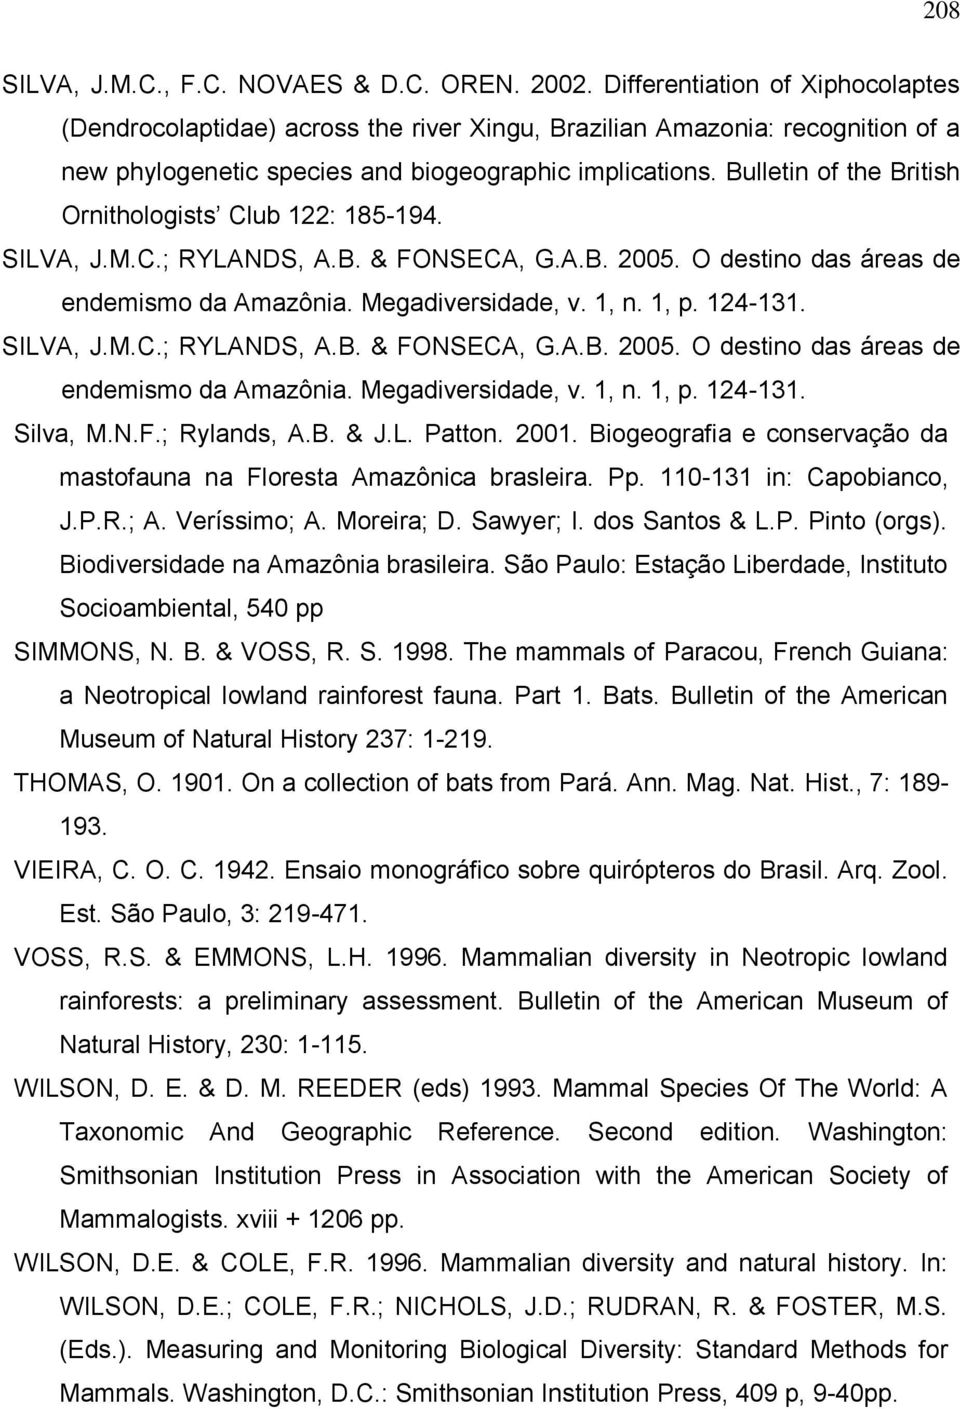 Bulletin of the British Ornithologists Club 22: 85-94. SLVA, J.M.C.; RYLANDS, A.B. & FONSECA, G.A.B. 2005. O destino das áreas de endemismo da Amazônia. Megadiversidade, v., n., p. 24-3. SLVA, J.M.C.; RYLANDS, A.B. & FONSECA, G.A.B. 2005. O destino das áreas de endemismo da Amazônia. Megadiversidade, v., n., p. 24-3. Silva, M.